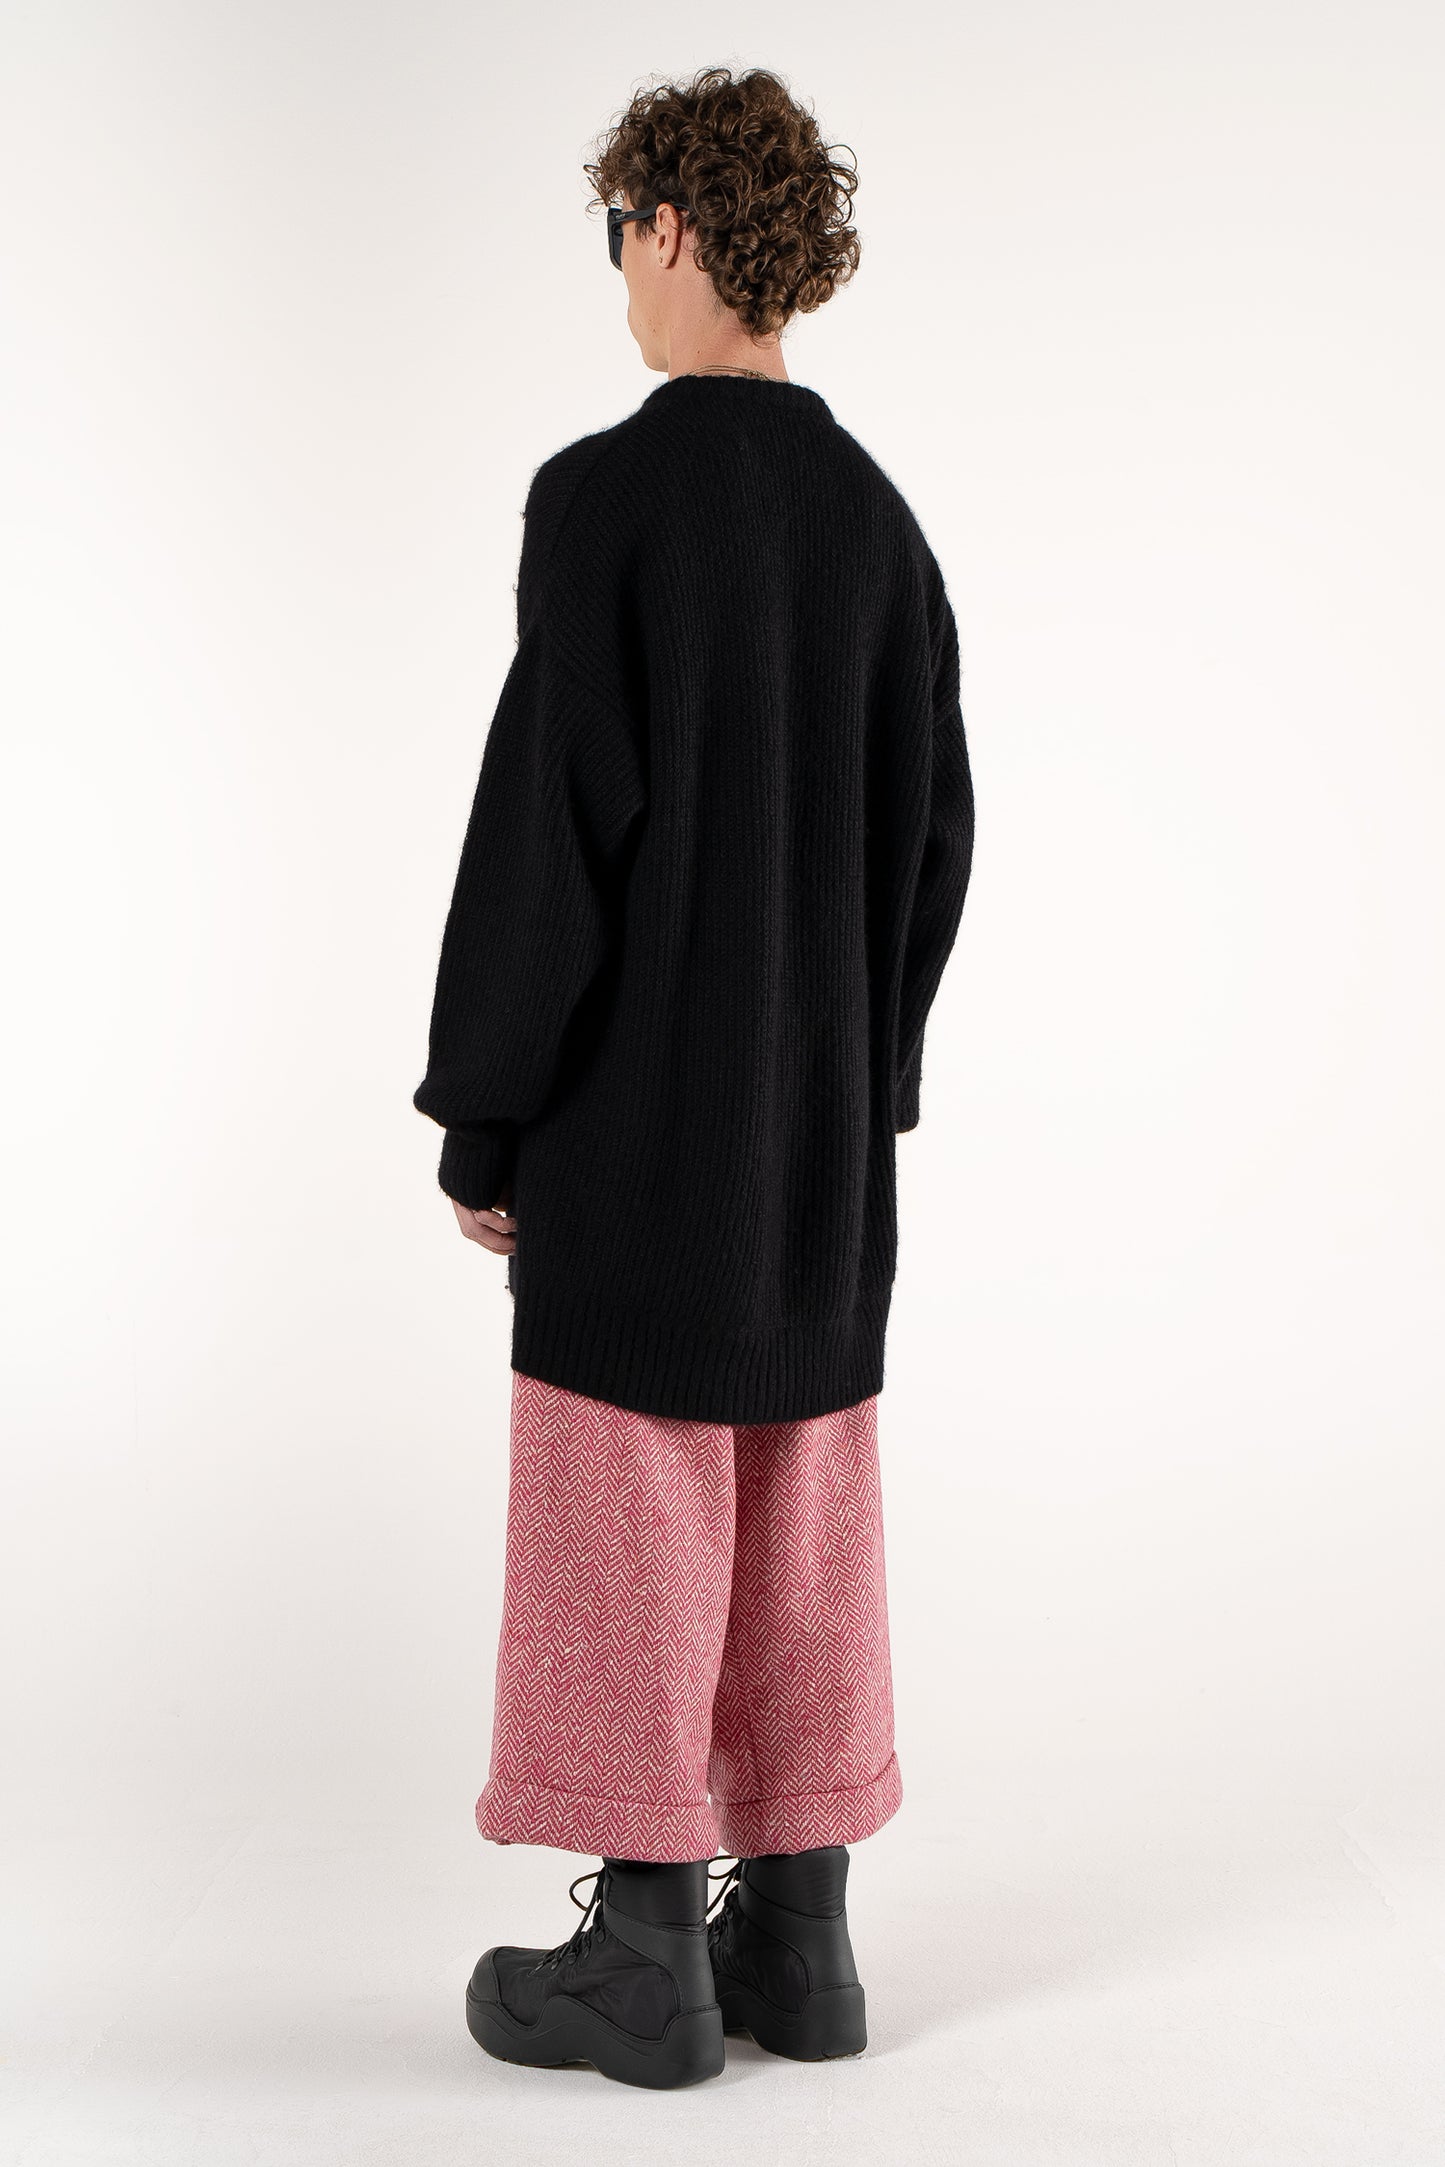 4Size Oversized Pants – Wool Herringbone Pink/White